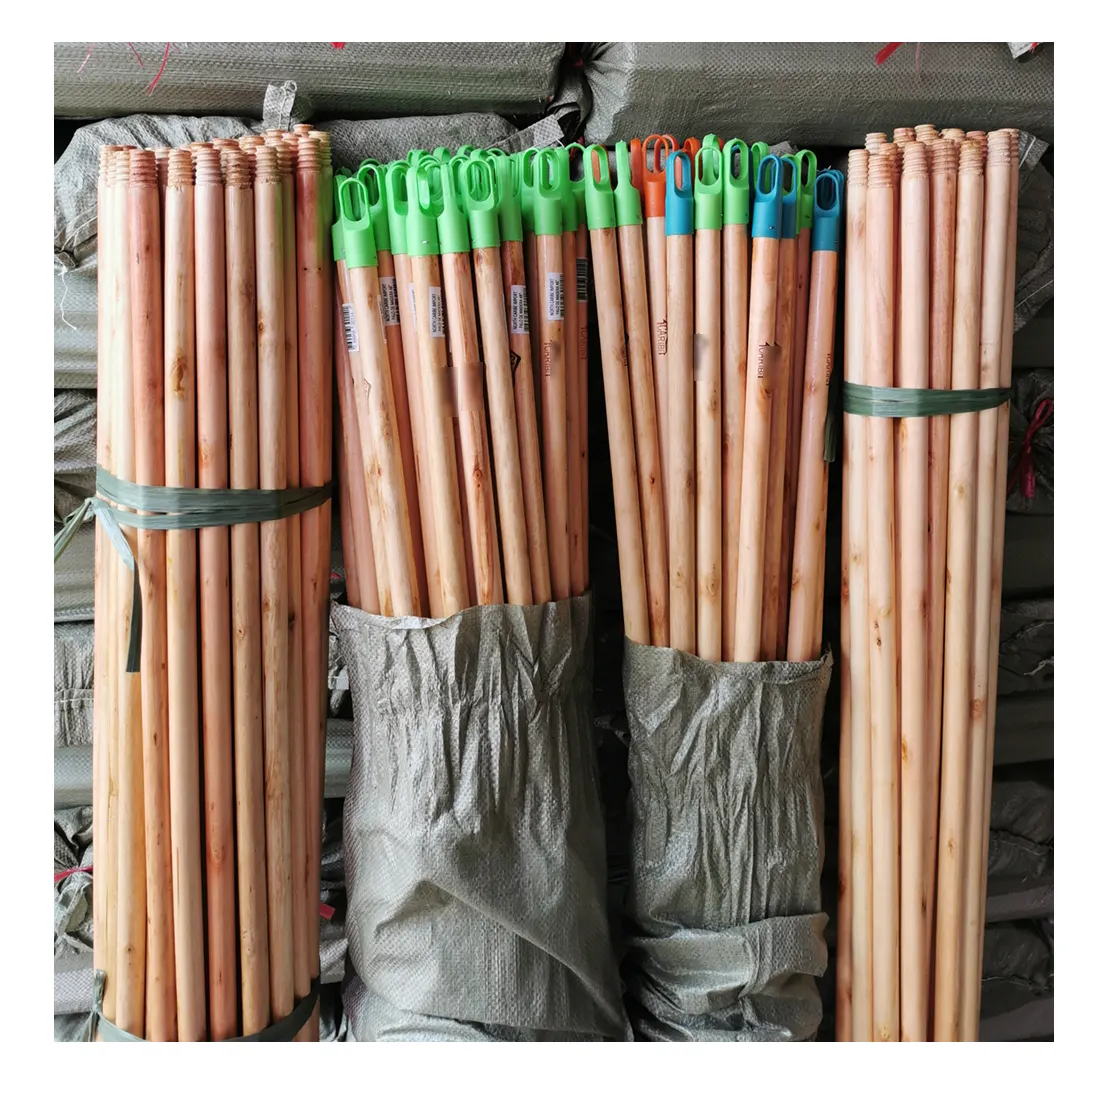 Plastic Dustpan Material and Plastic Broomstick Material varnishing wooden broom handles